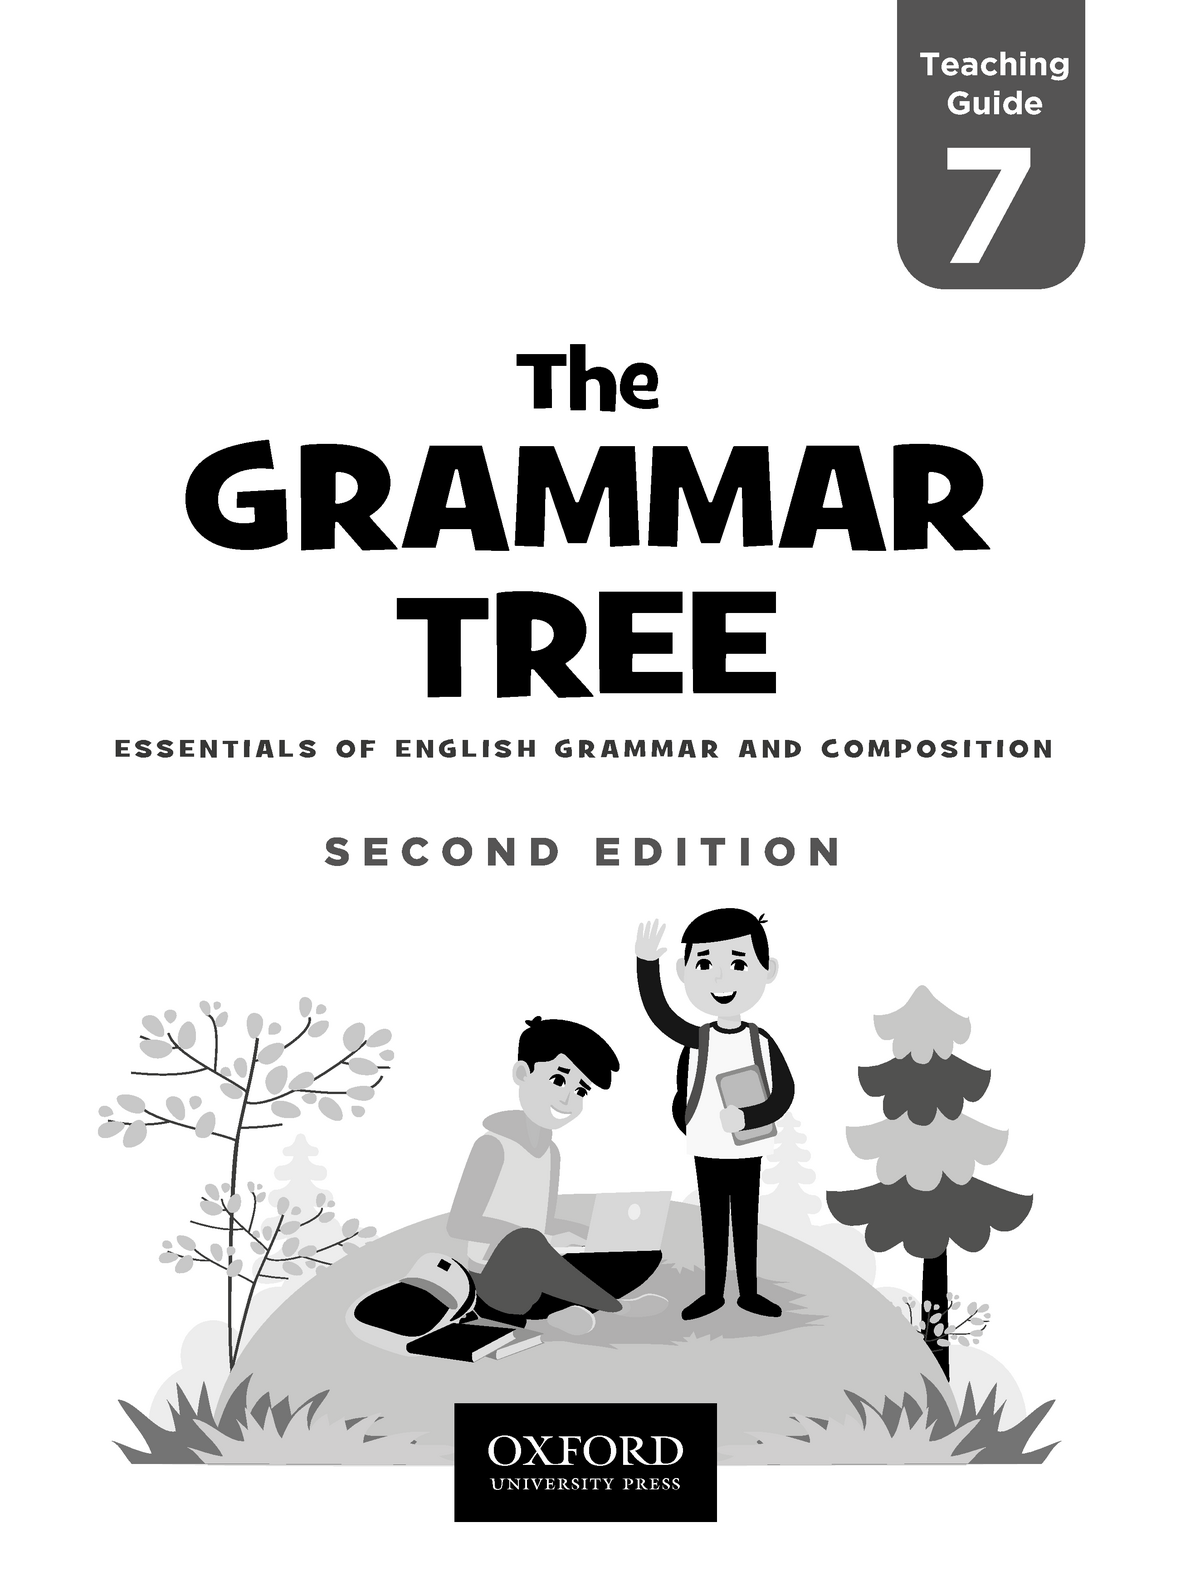 grammer tree book book 7 second edition essentials of english grammar and composition grammar studocu